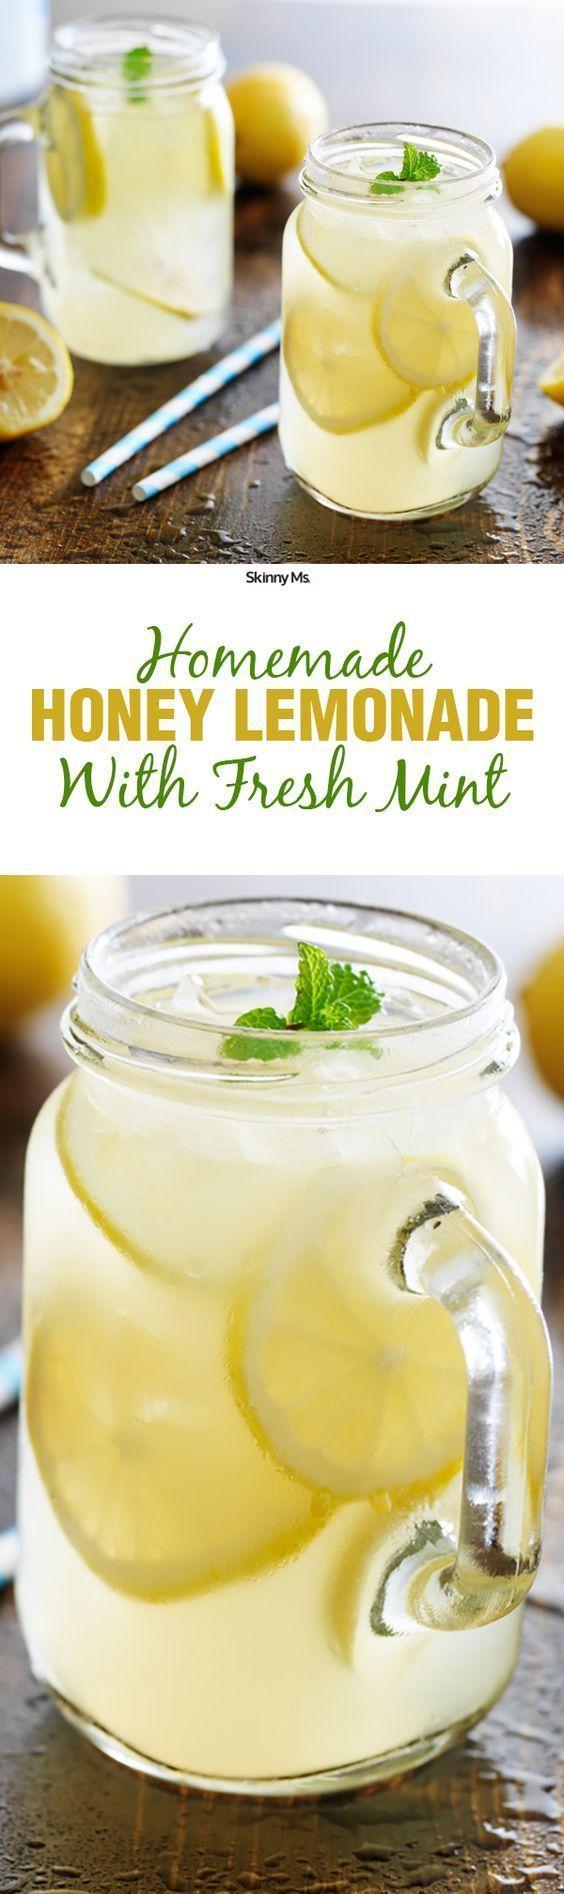 Hochzeit - Homemade Honey Lemonade With Fresh Mint